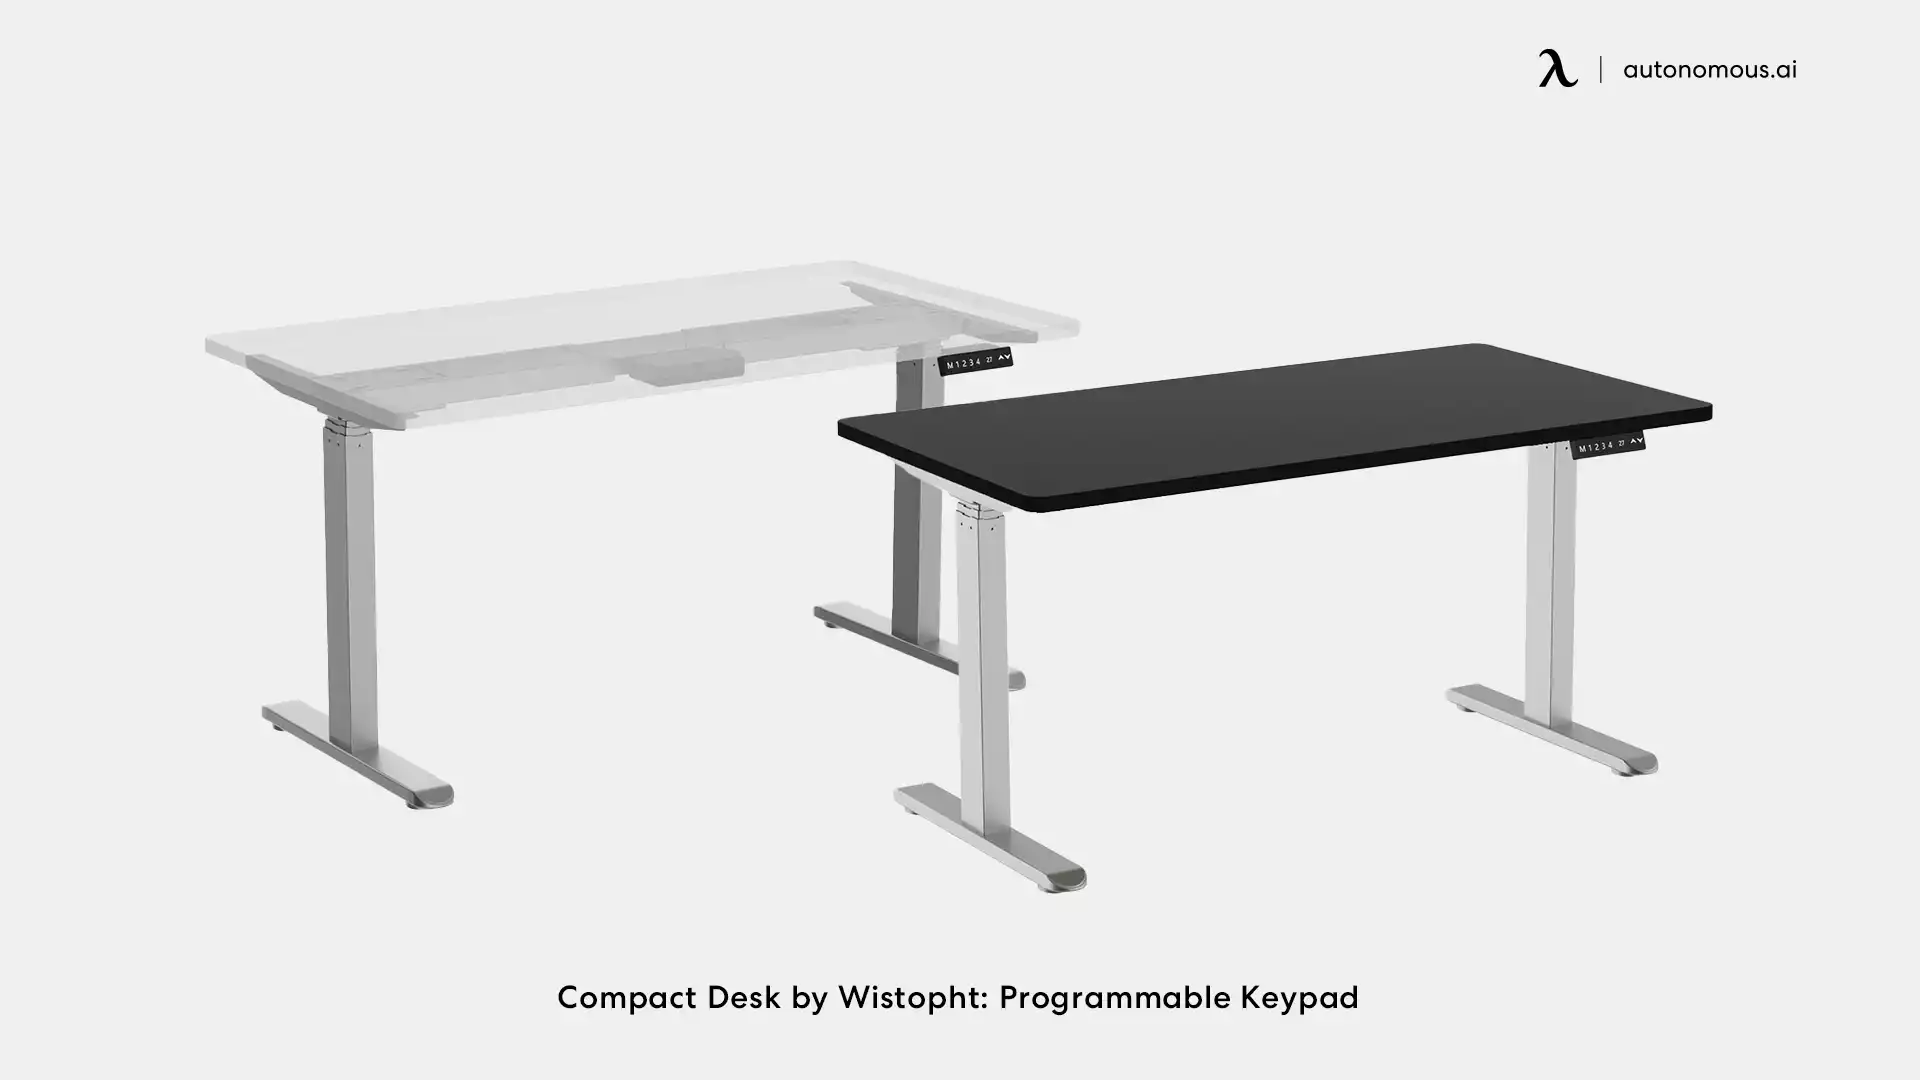 CompactDesk by Wistopht: Programmable Keypad